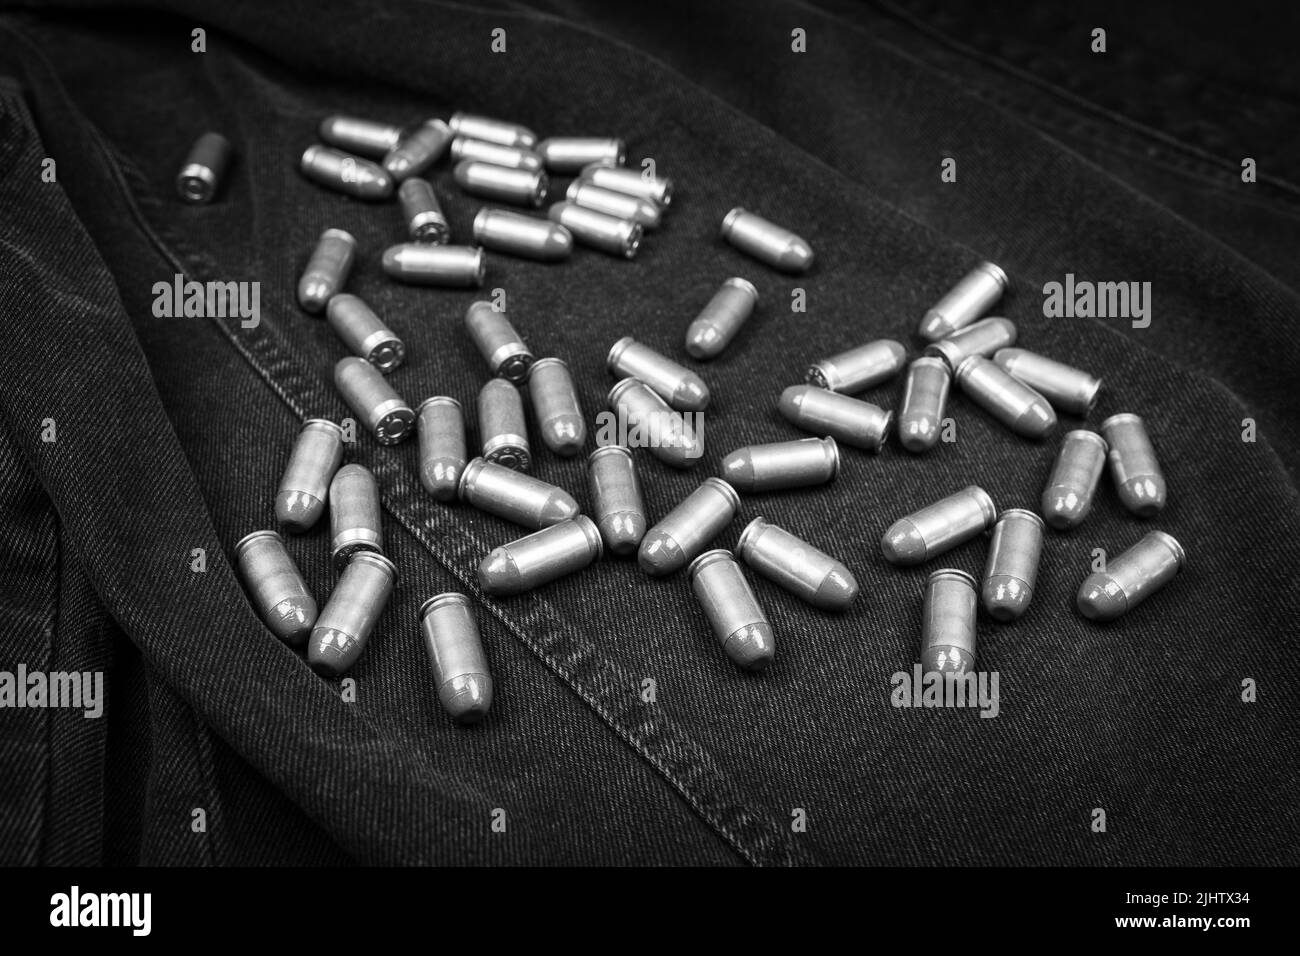 .45 ACP cartridges on a black denim background, monochrome photo Stock Photo